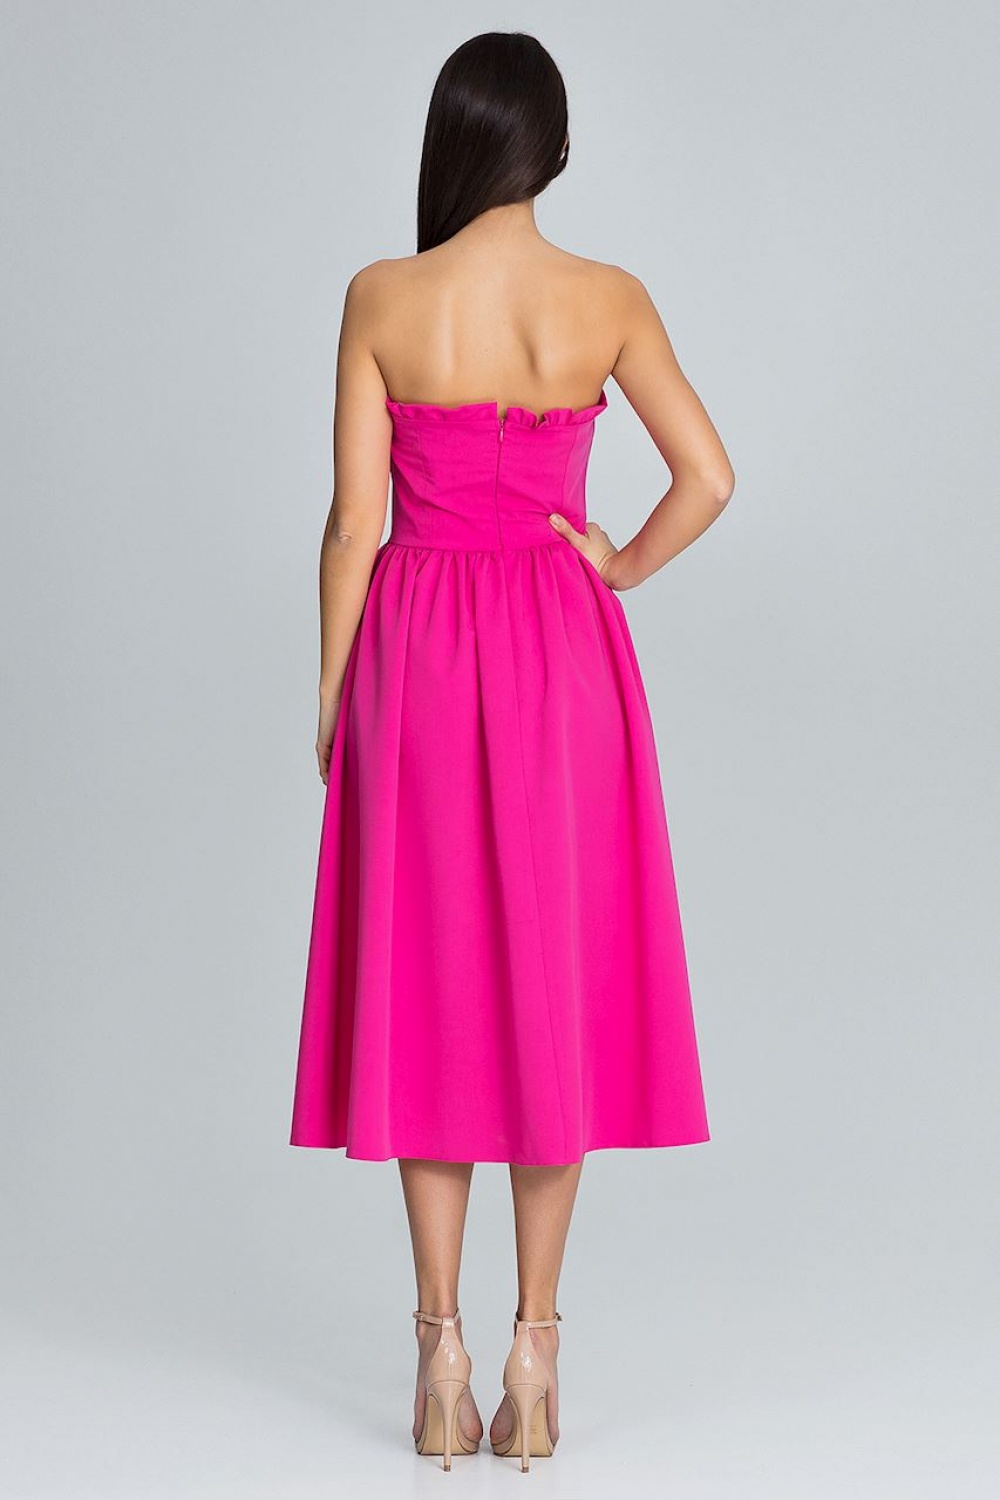 Abendkleid model 116341 Figl rosa Damen